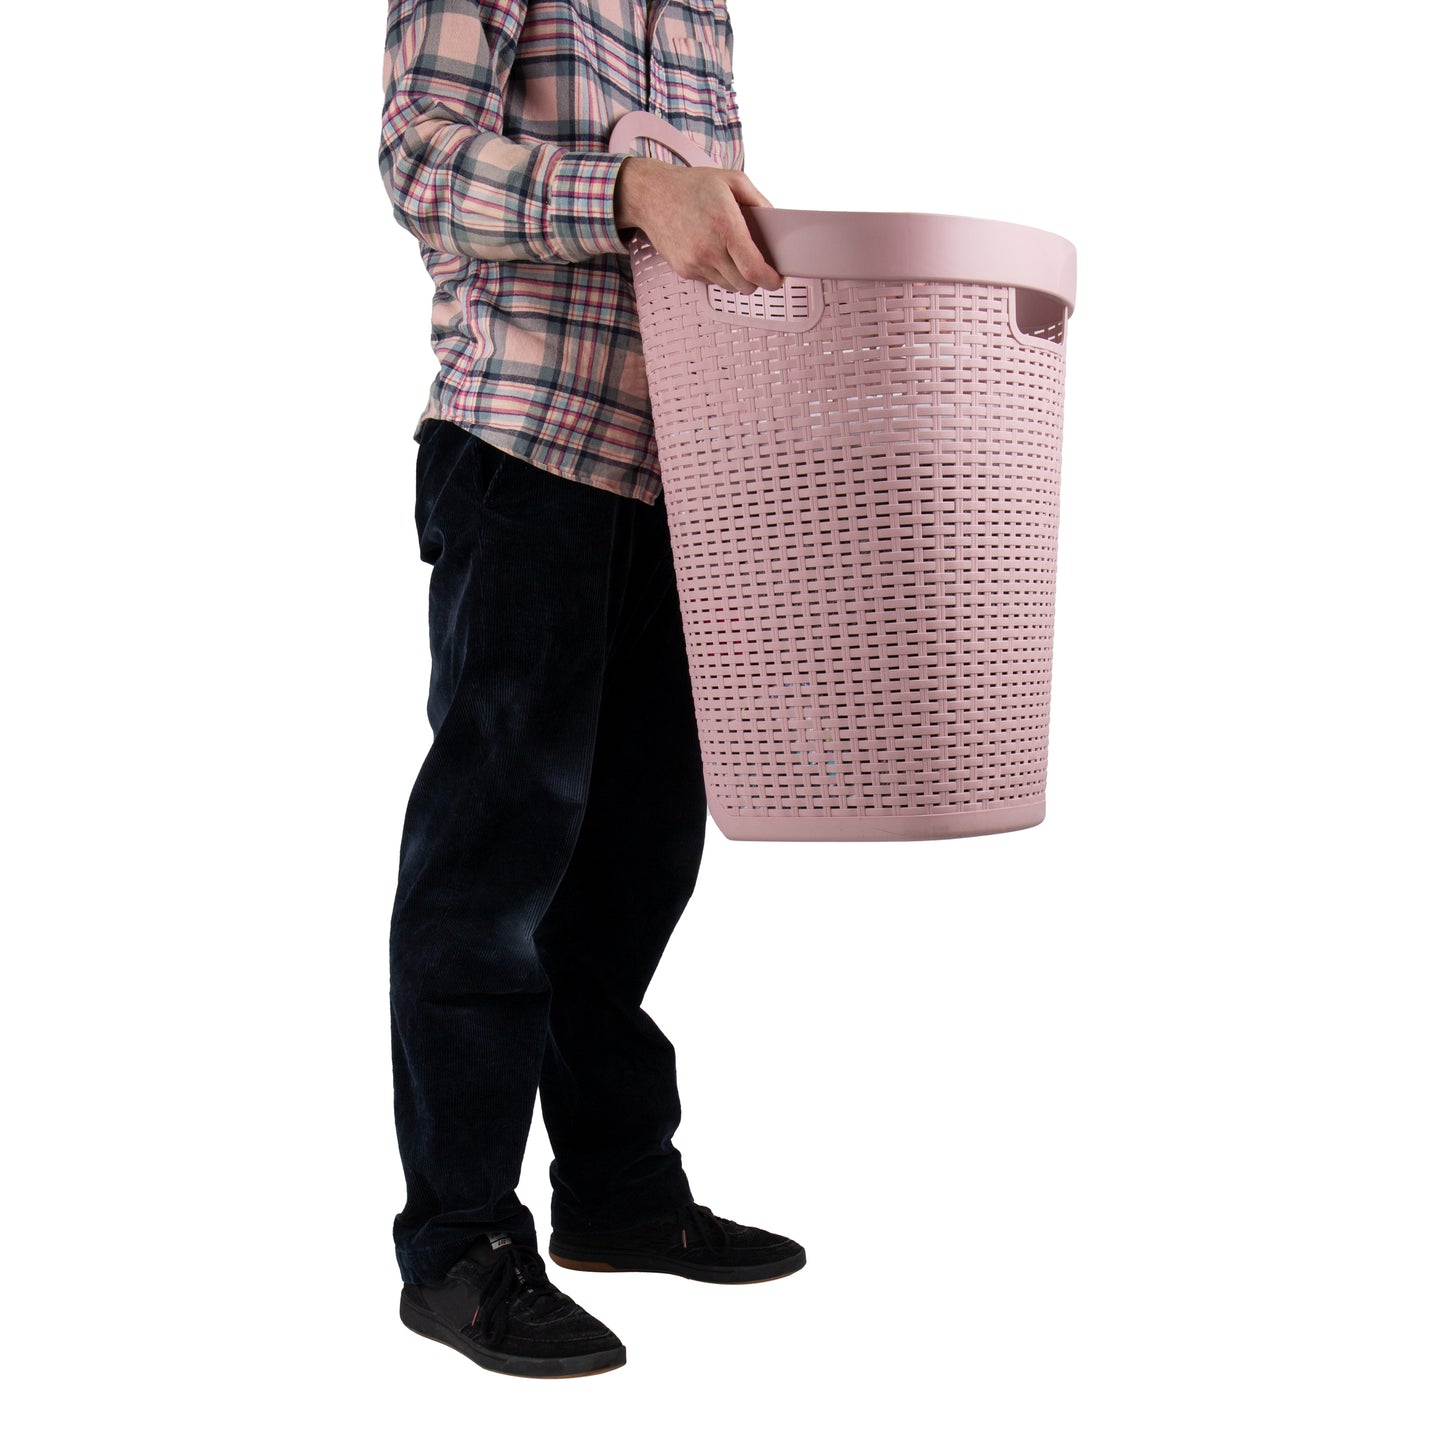 Mind Reader 60L Rolling Laundry Hamper, Clothes Basket, Wheels, Wicker Style, Plastic, 19.5"L x 14.75"W x 29.25"H